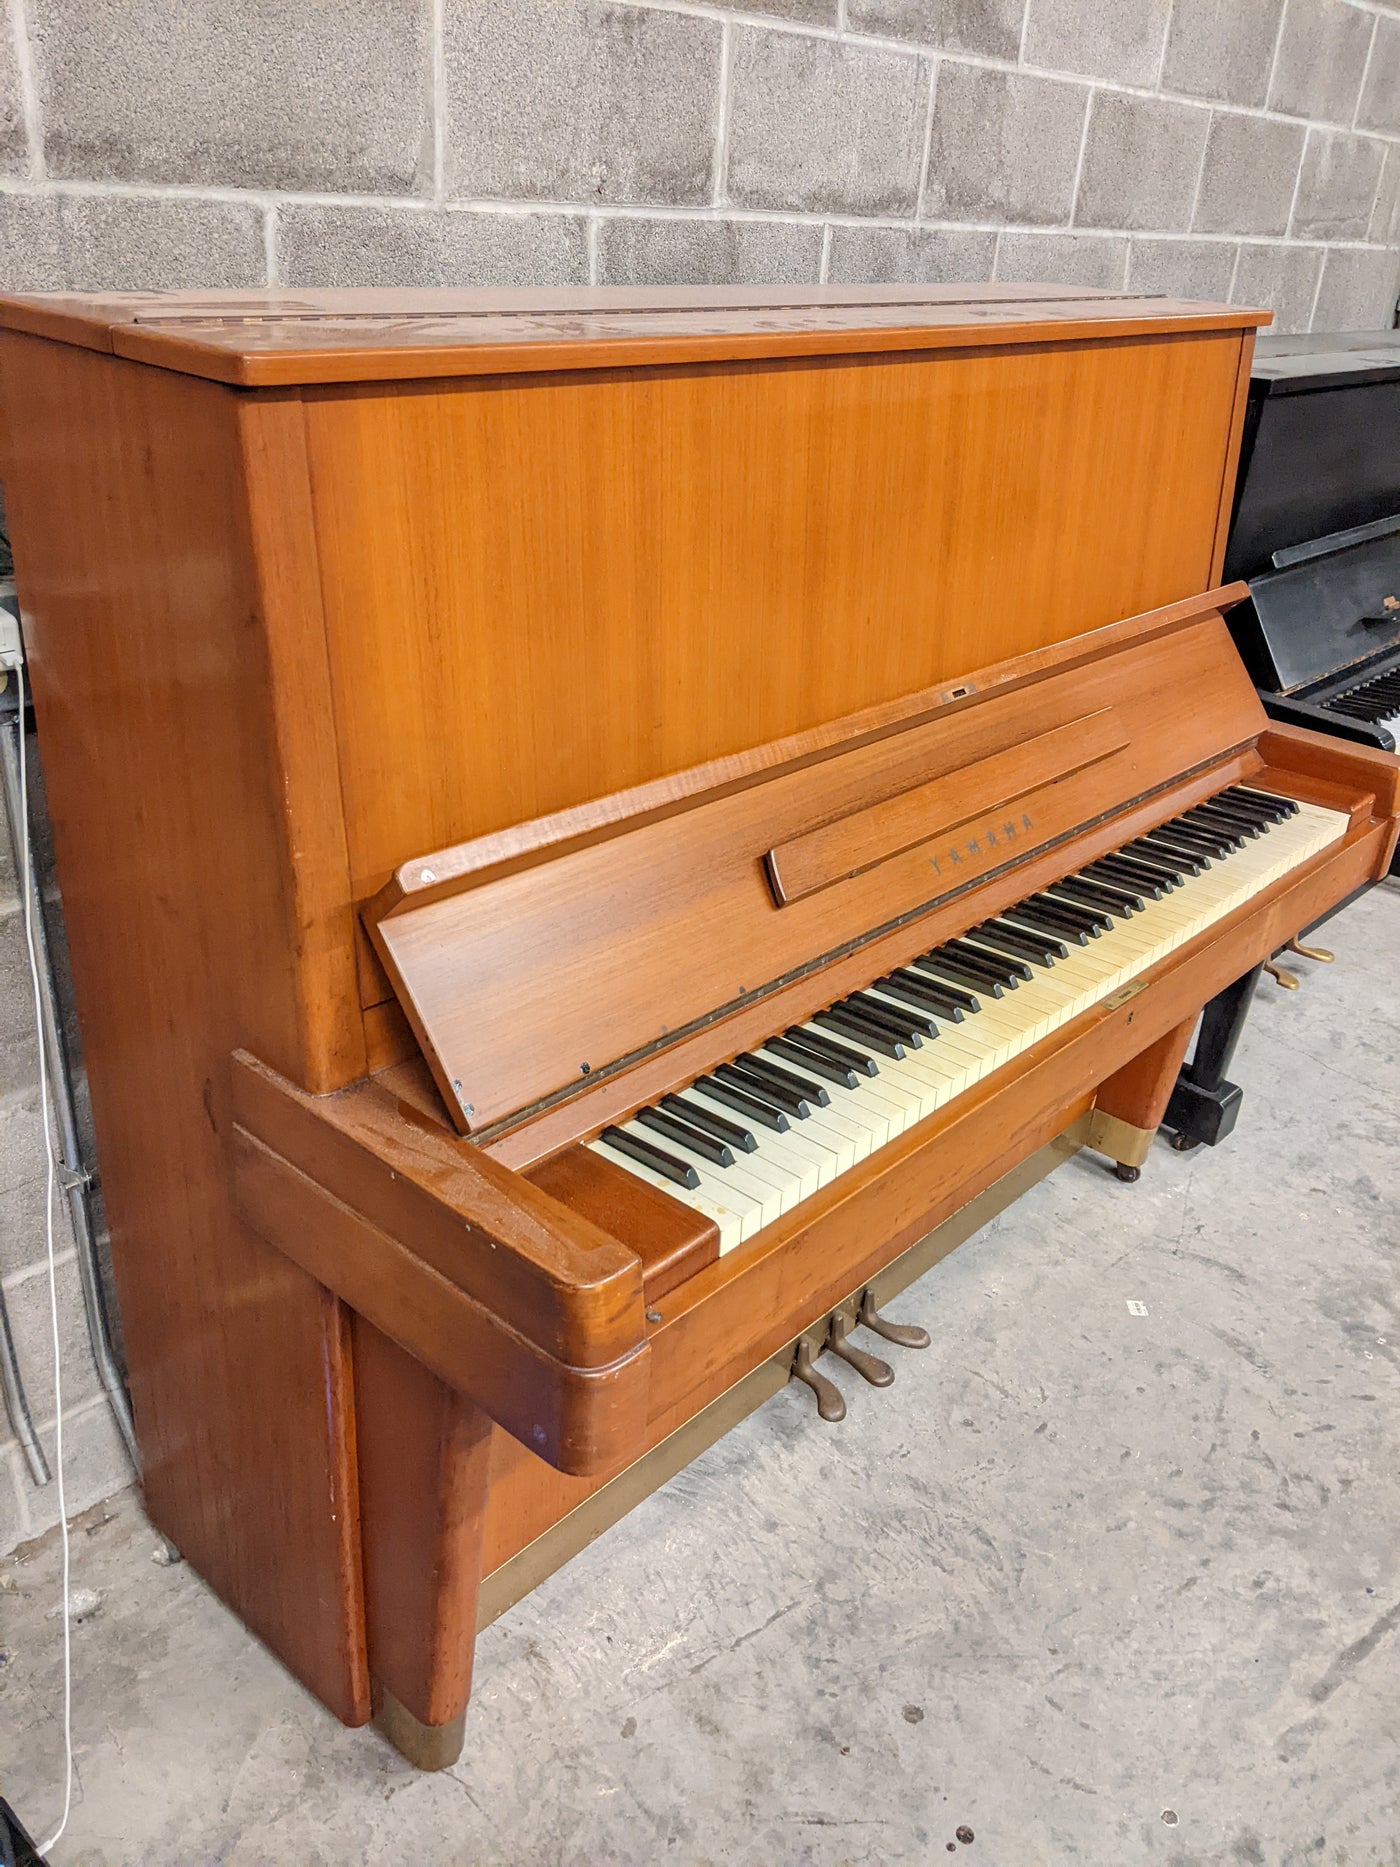 1966 Yamaha 52" U7 Upright Piano | Solid Teak Wood | SN: 520472 | Used